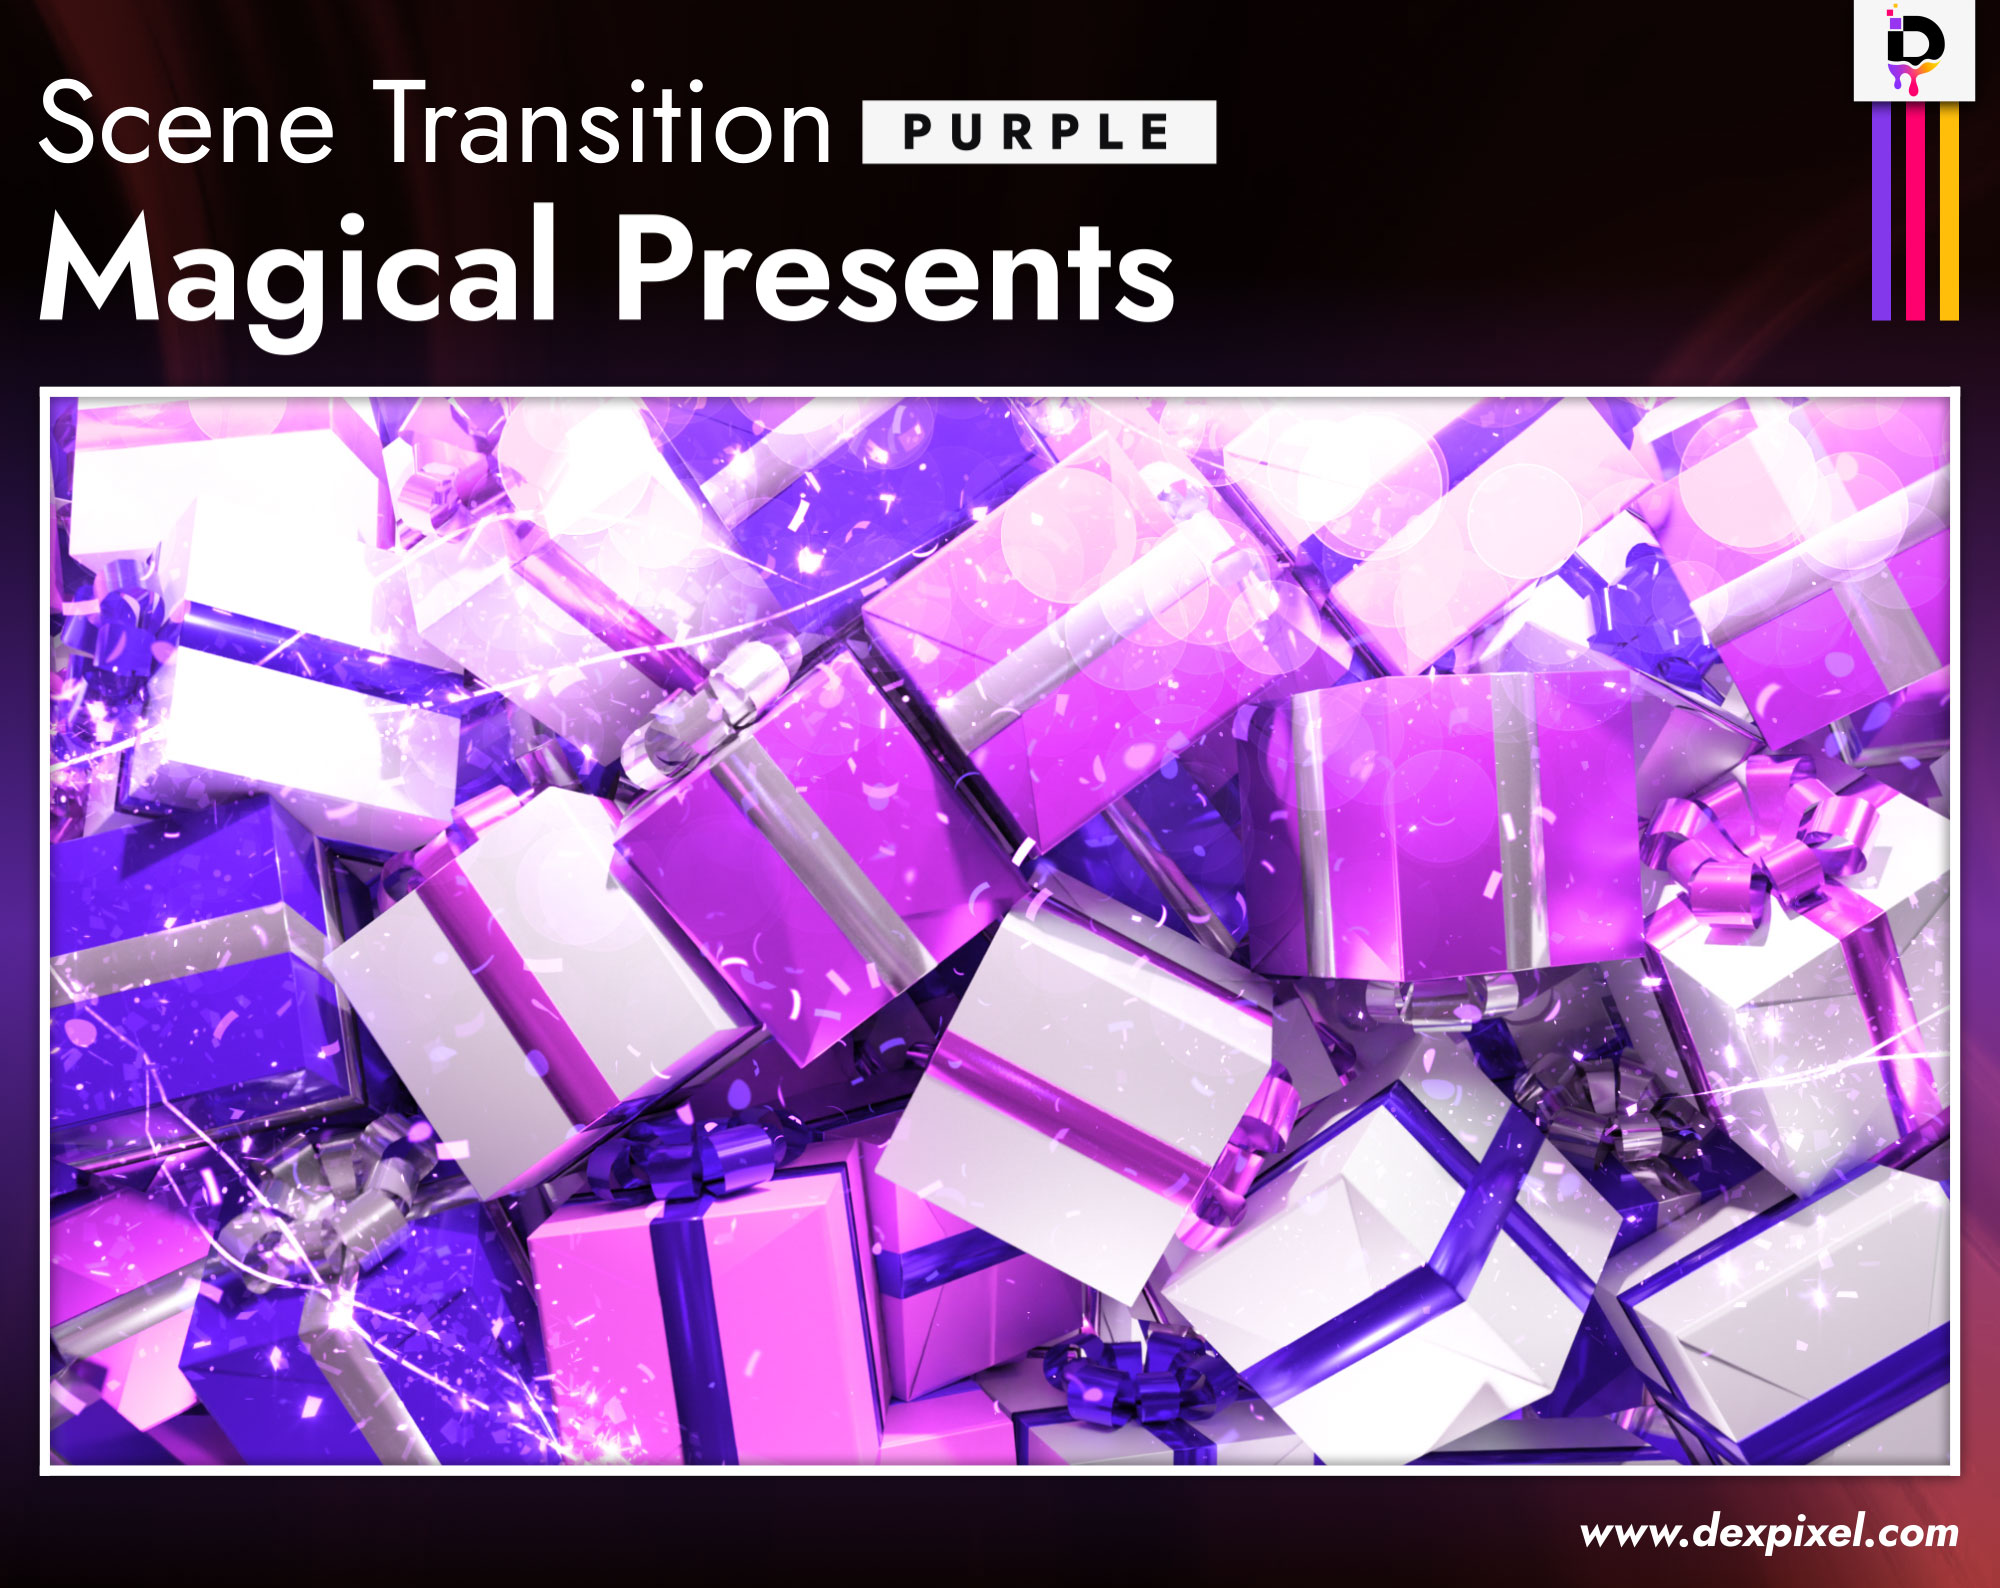 Scene Transition Dexpixel Magical Presents Purple